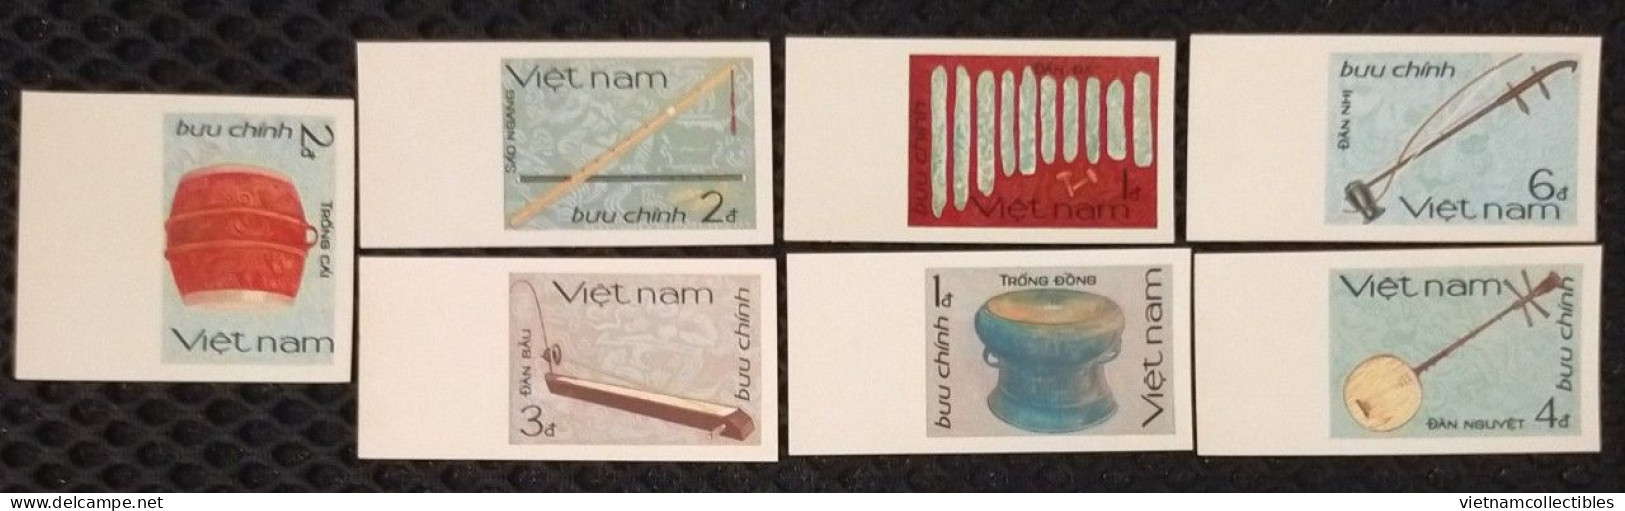 Vietnam Viet Nam MNH Imperf Stamps 1985 : National Musical Instruments / Music (Ms481) - Vietnam